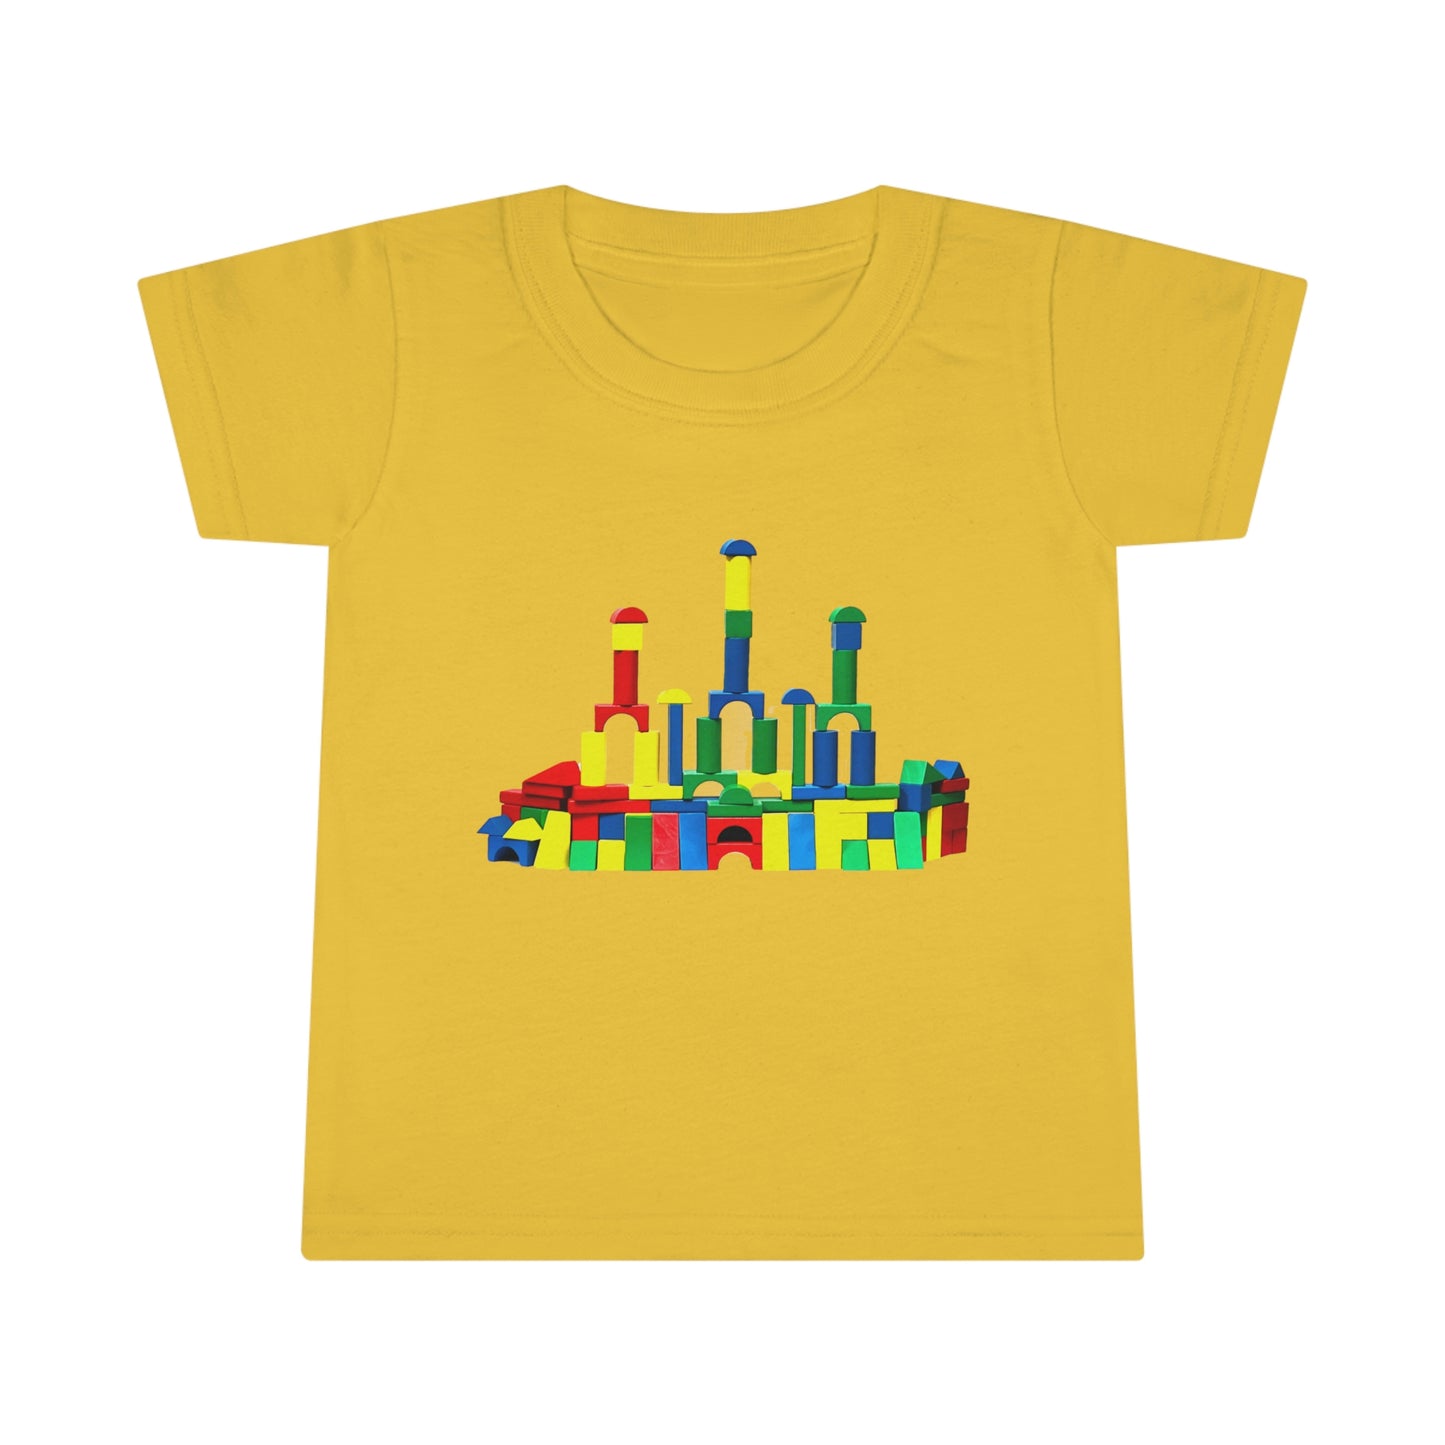 Toddler Block Castle T-shirt